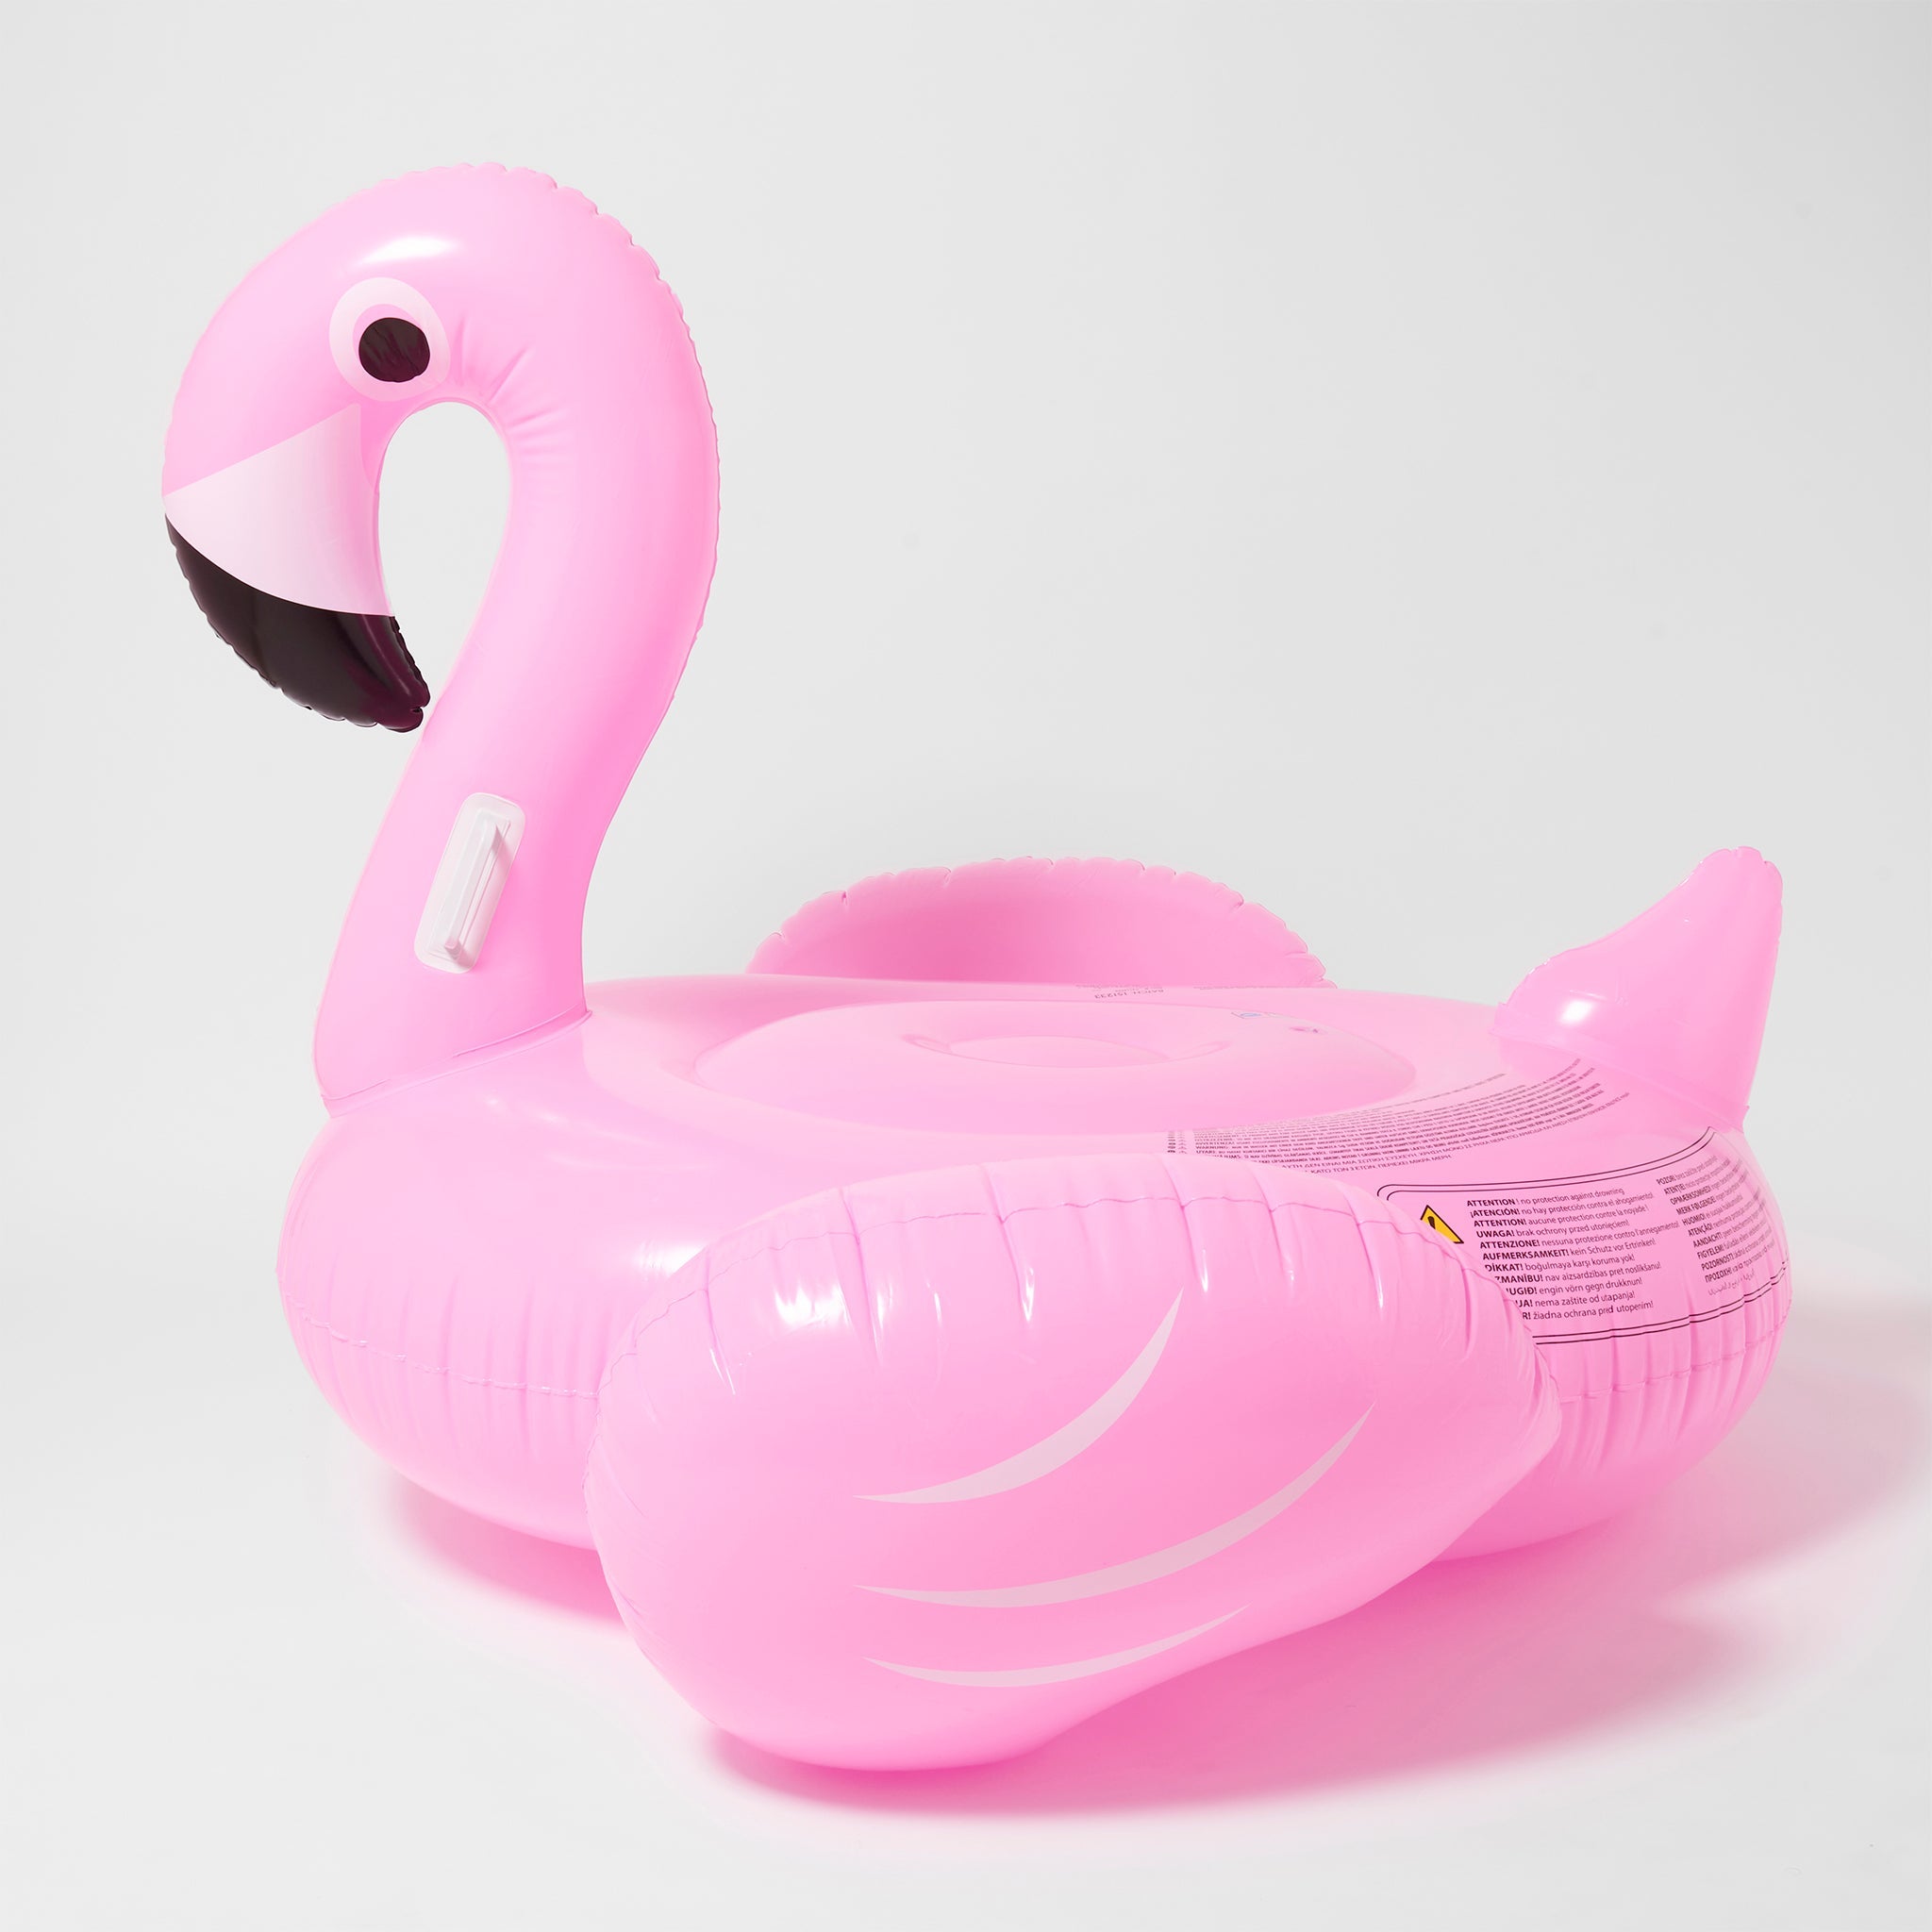 Luxe Ride-On Float | Rosie the Flamingo Bubblegum Pink